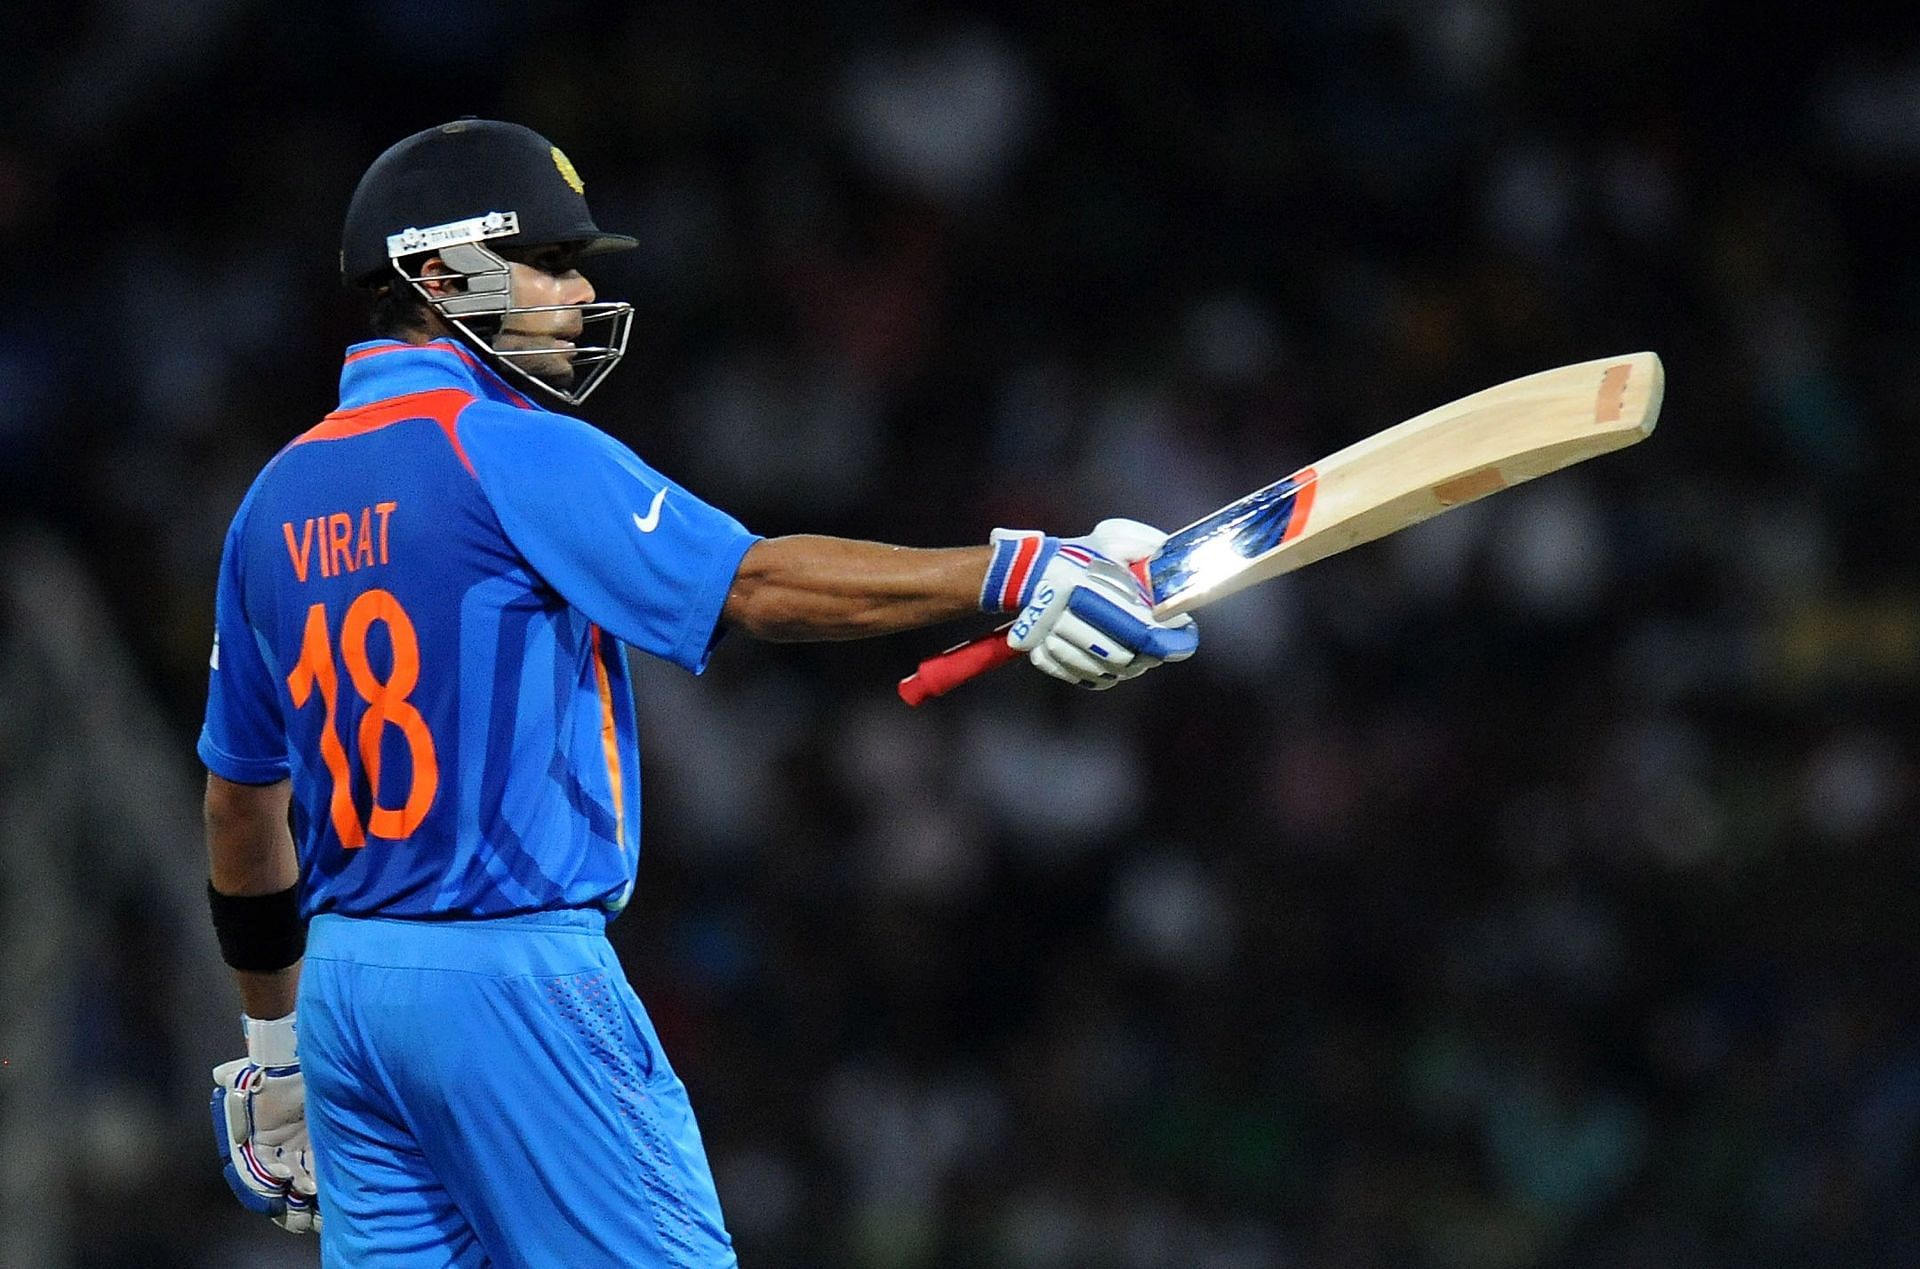 Virat Kohli notched up his highest ODI score in Asia Cup 2012.